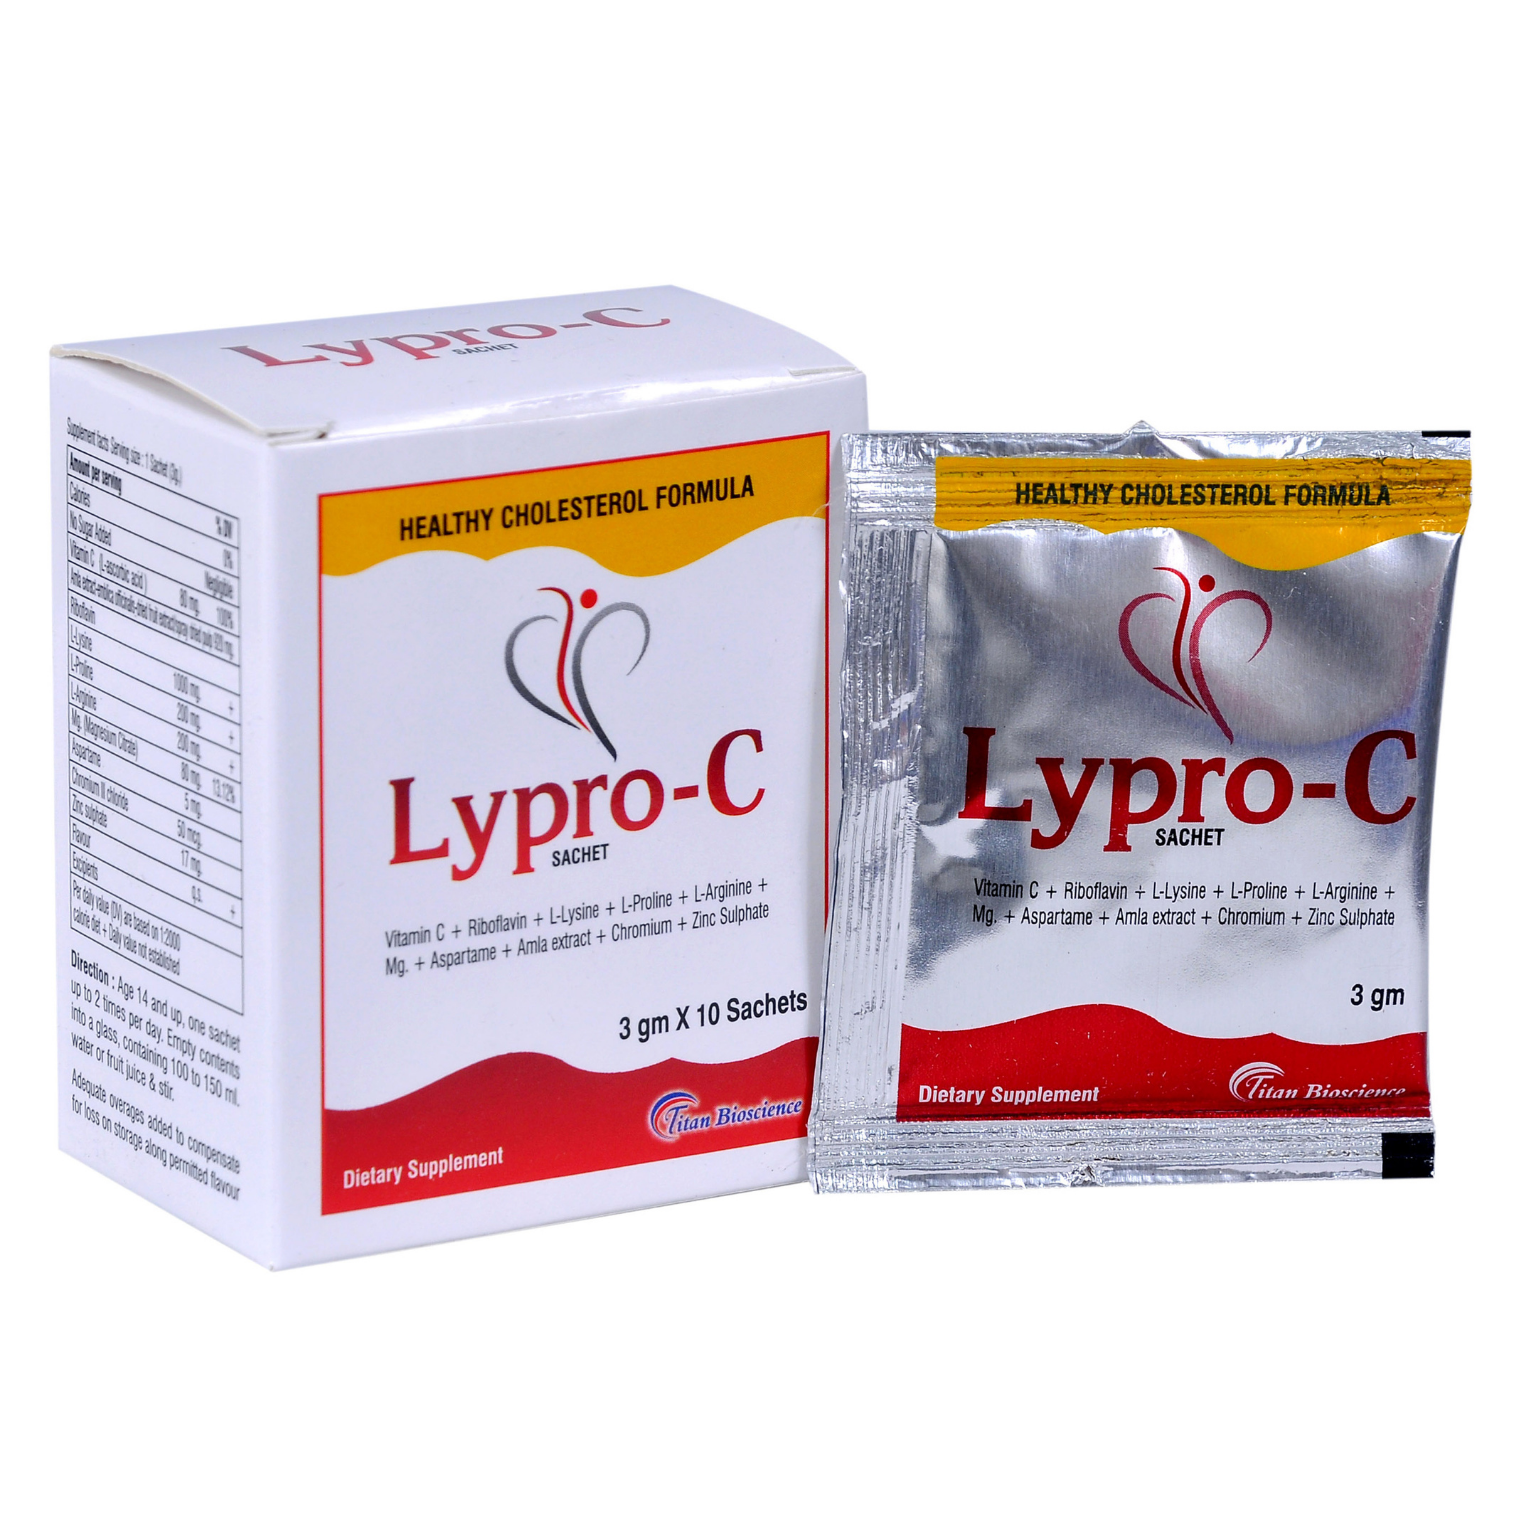 lypro-c healthy cholesterol formula for lowering cholesterol